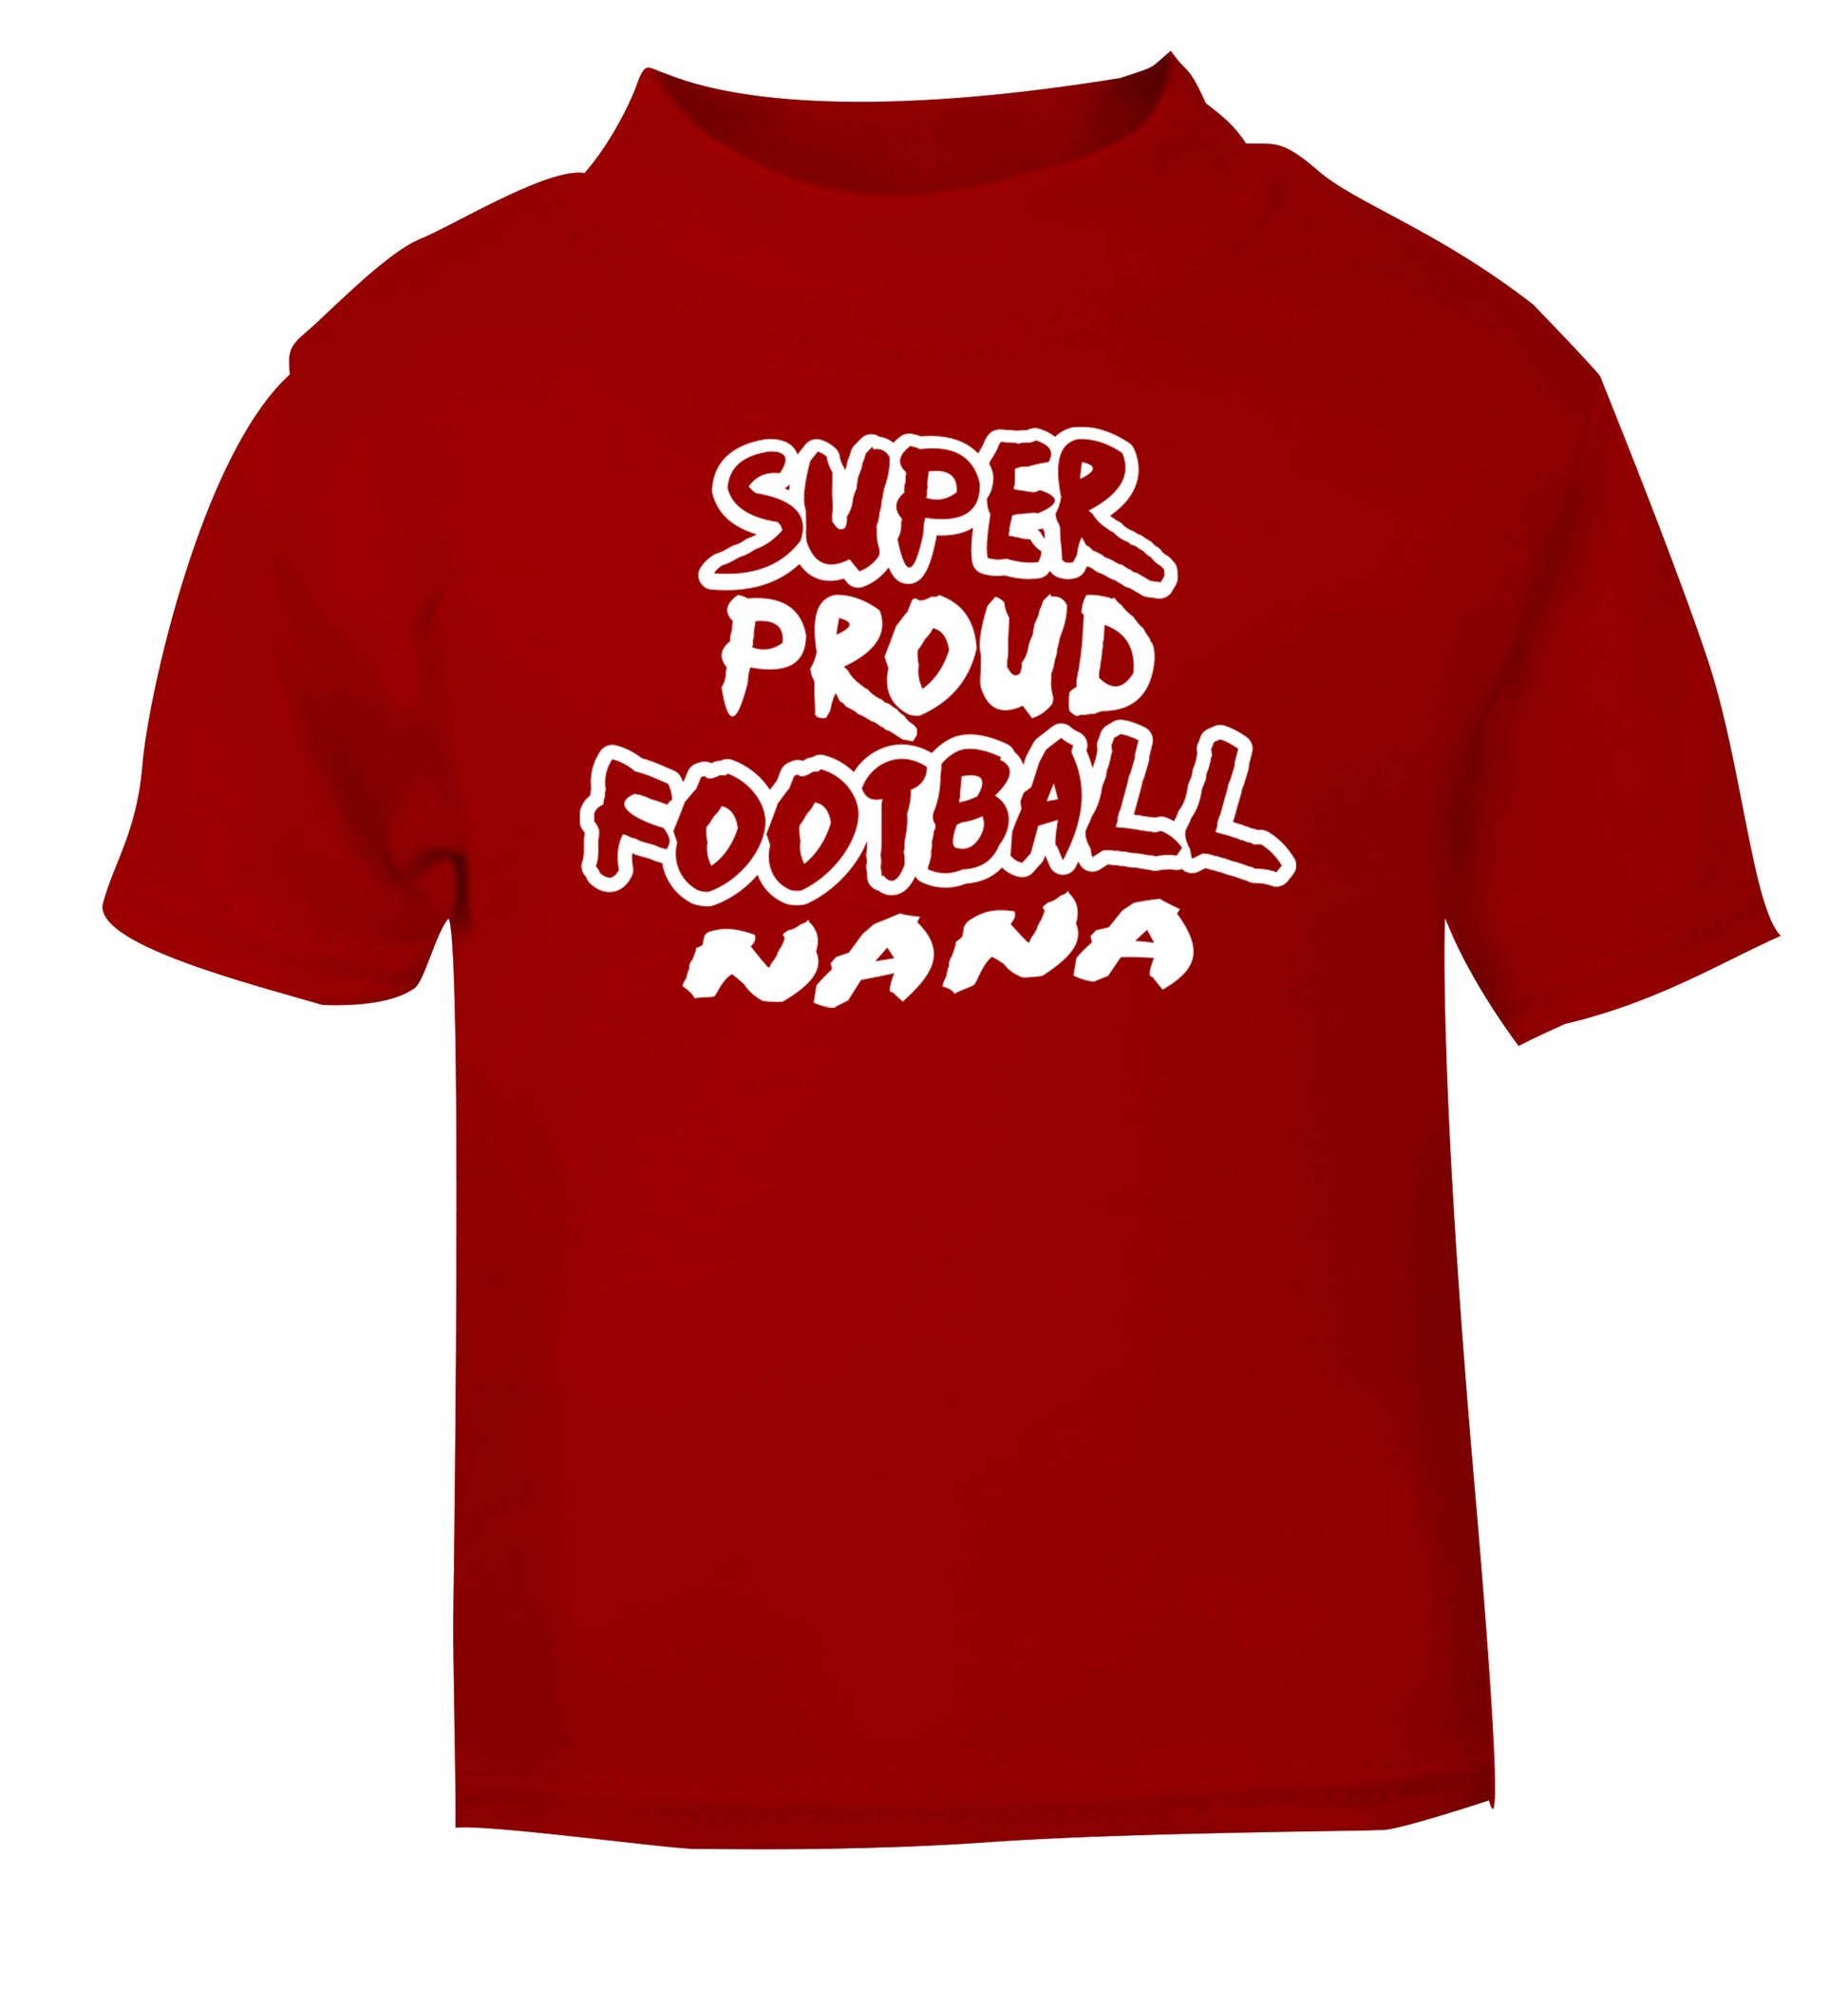 Super proud football nana red Baby Toddler Tshirt 2 Years